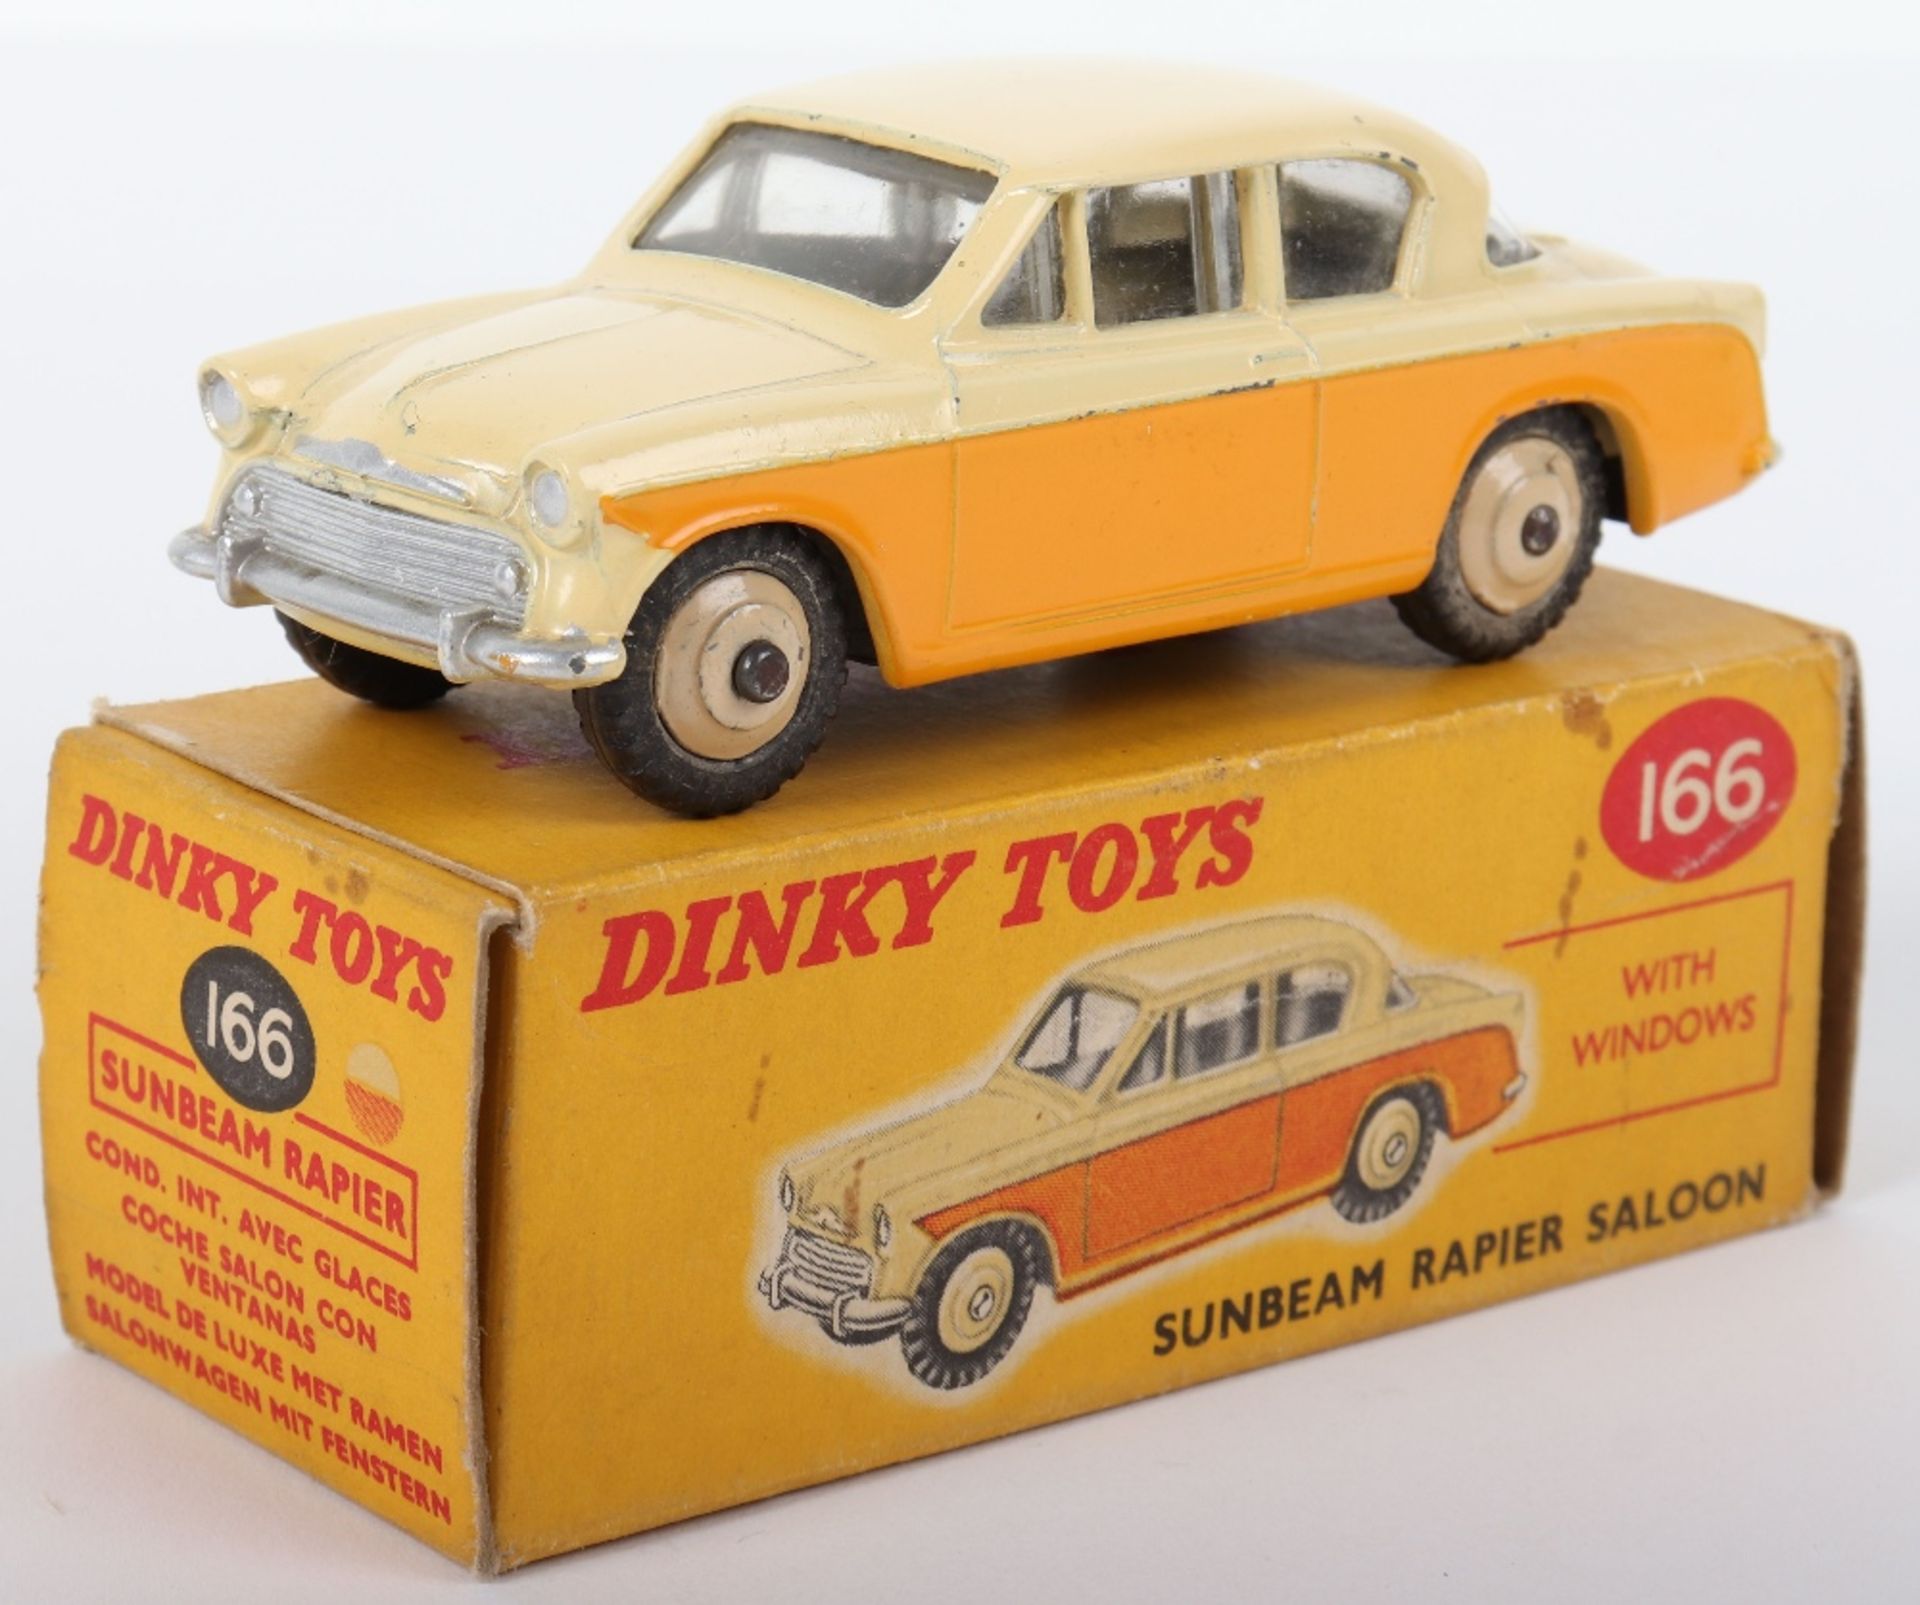 Dinky Toys 166 Sunbeam Rapier Saloon